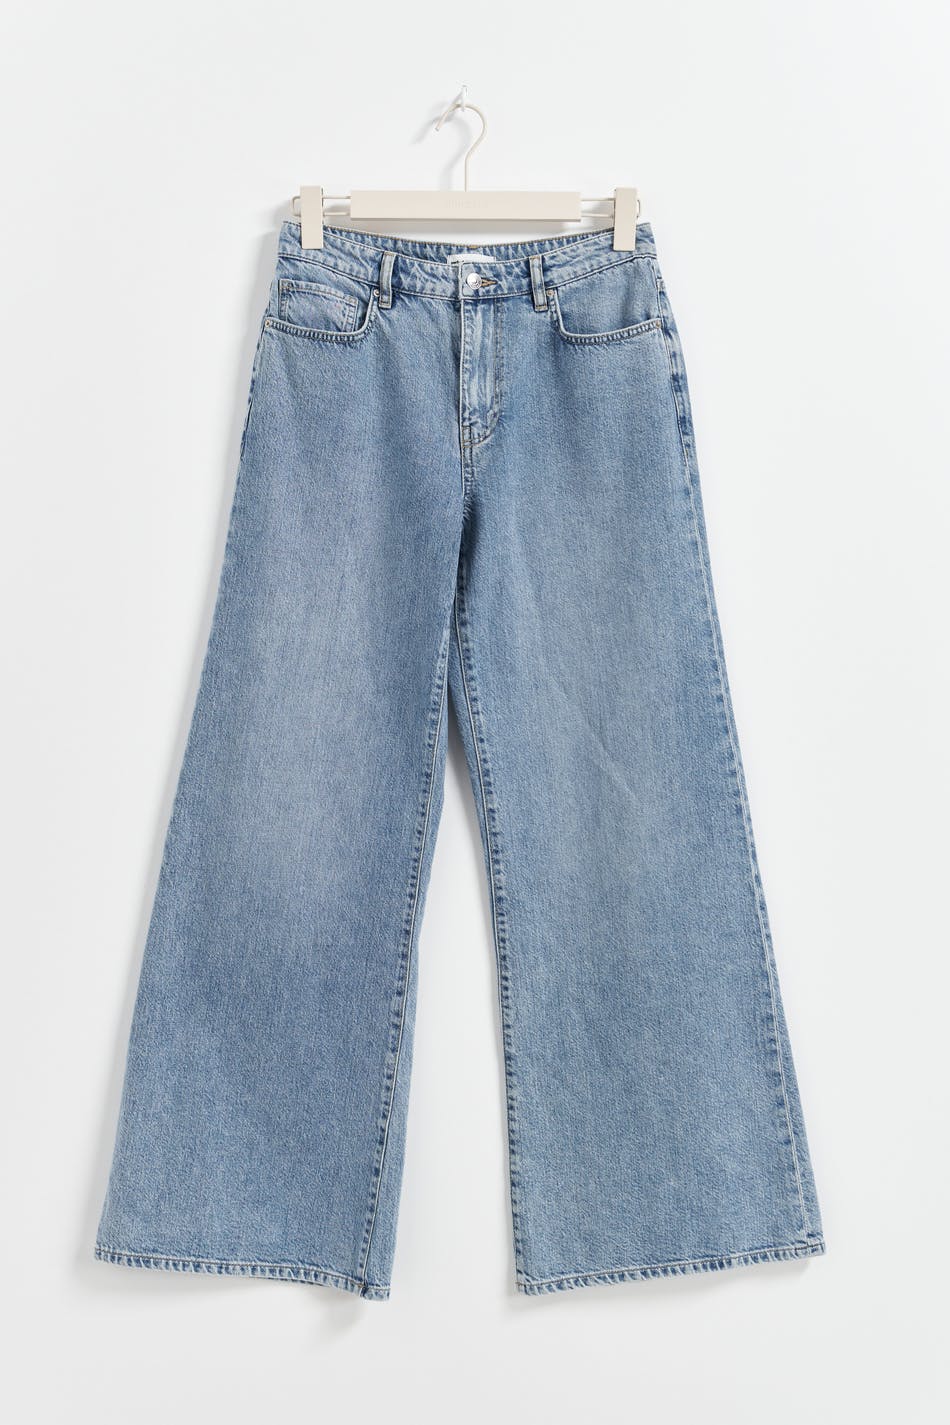 Gina Tricot - Super wide petite jeans - wide jeans - Blue - 36 - Female